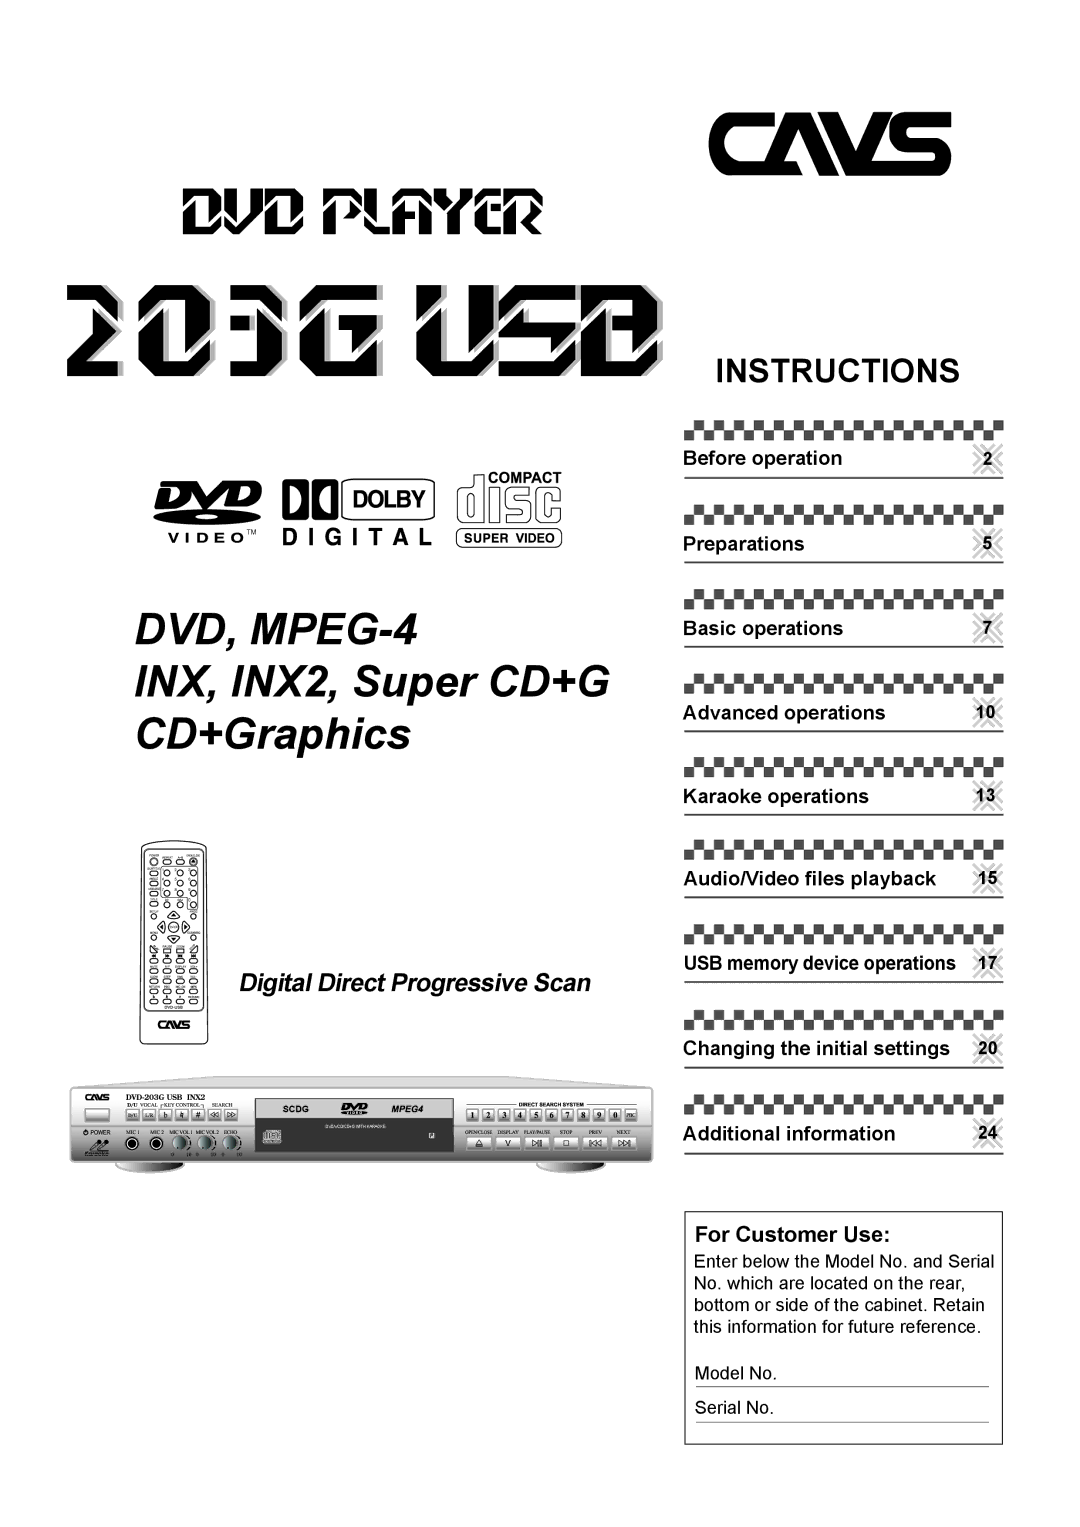 CAVS 203G USB manual DVD Player, USB memory device operations 